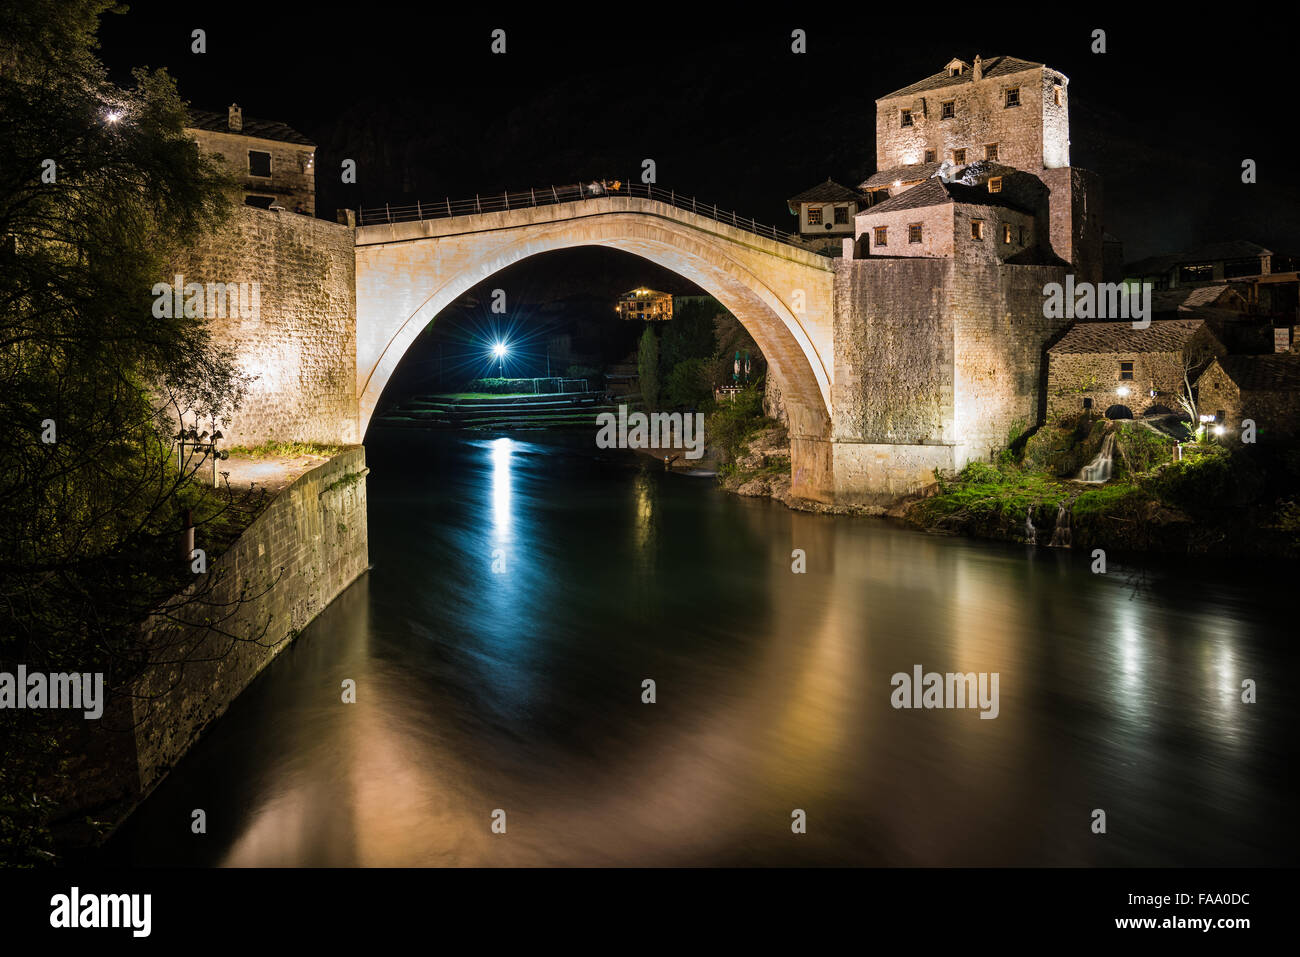 The Old Bridge in Mostar at night, Bosnia and Herzegovina Stock Photo